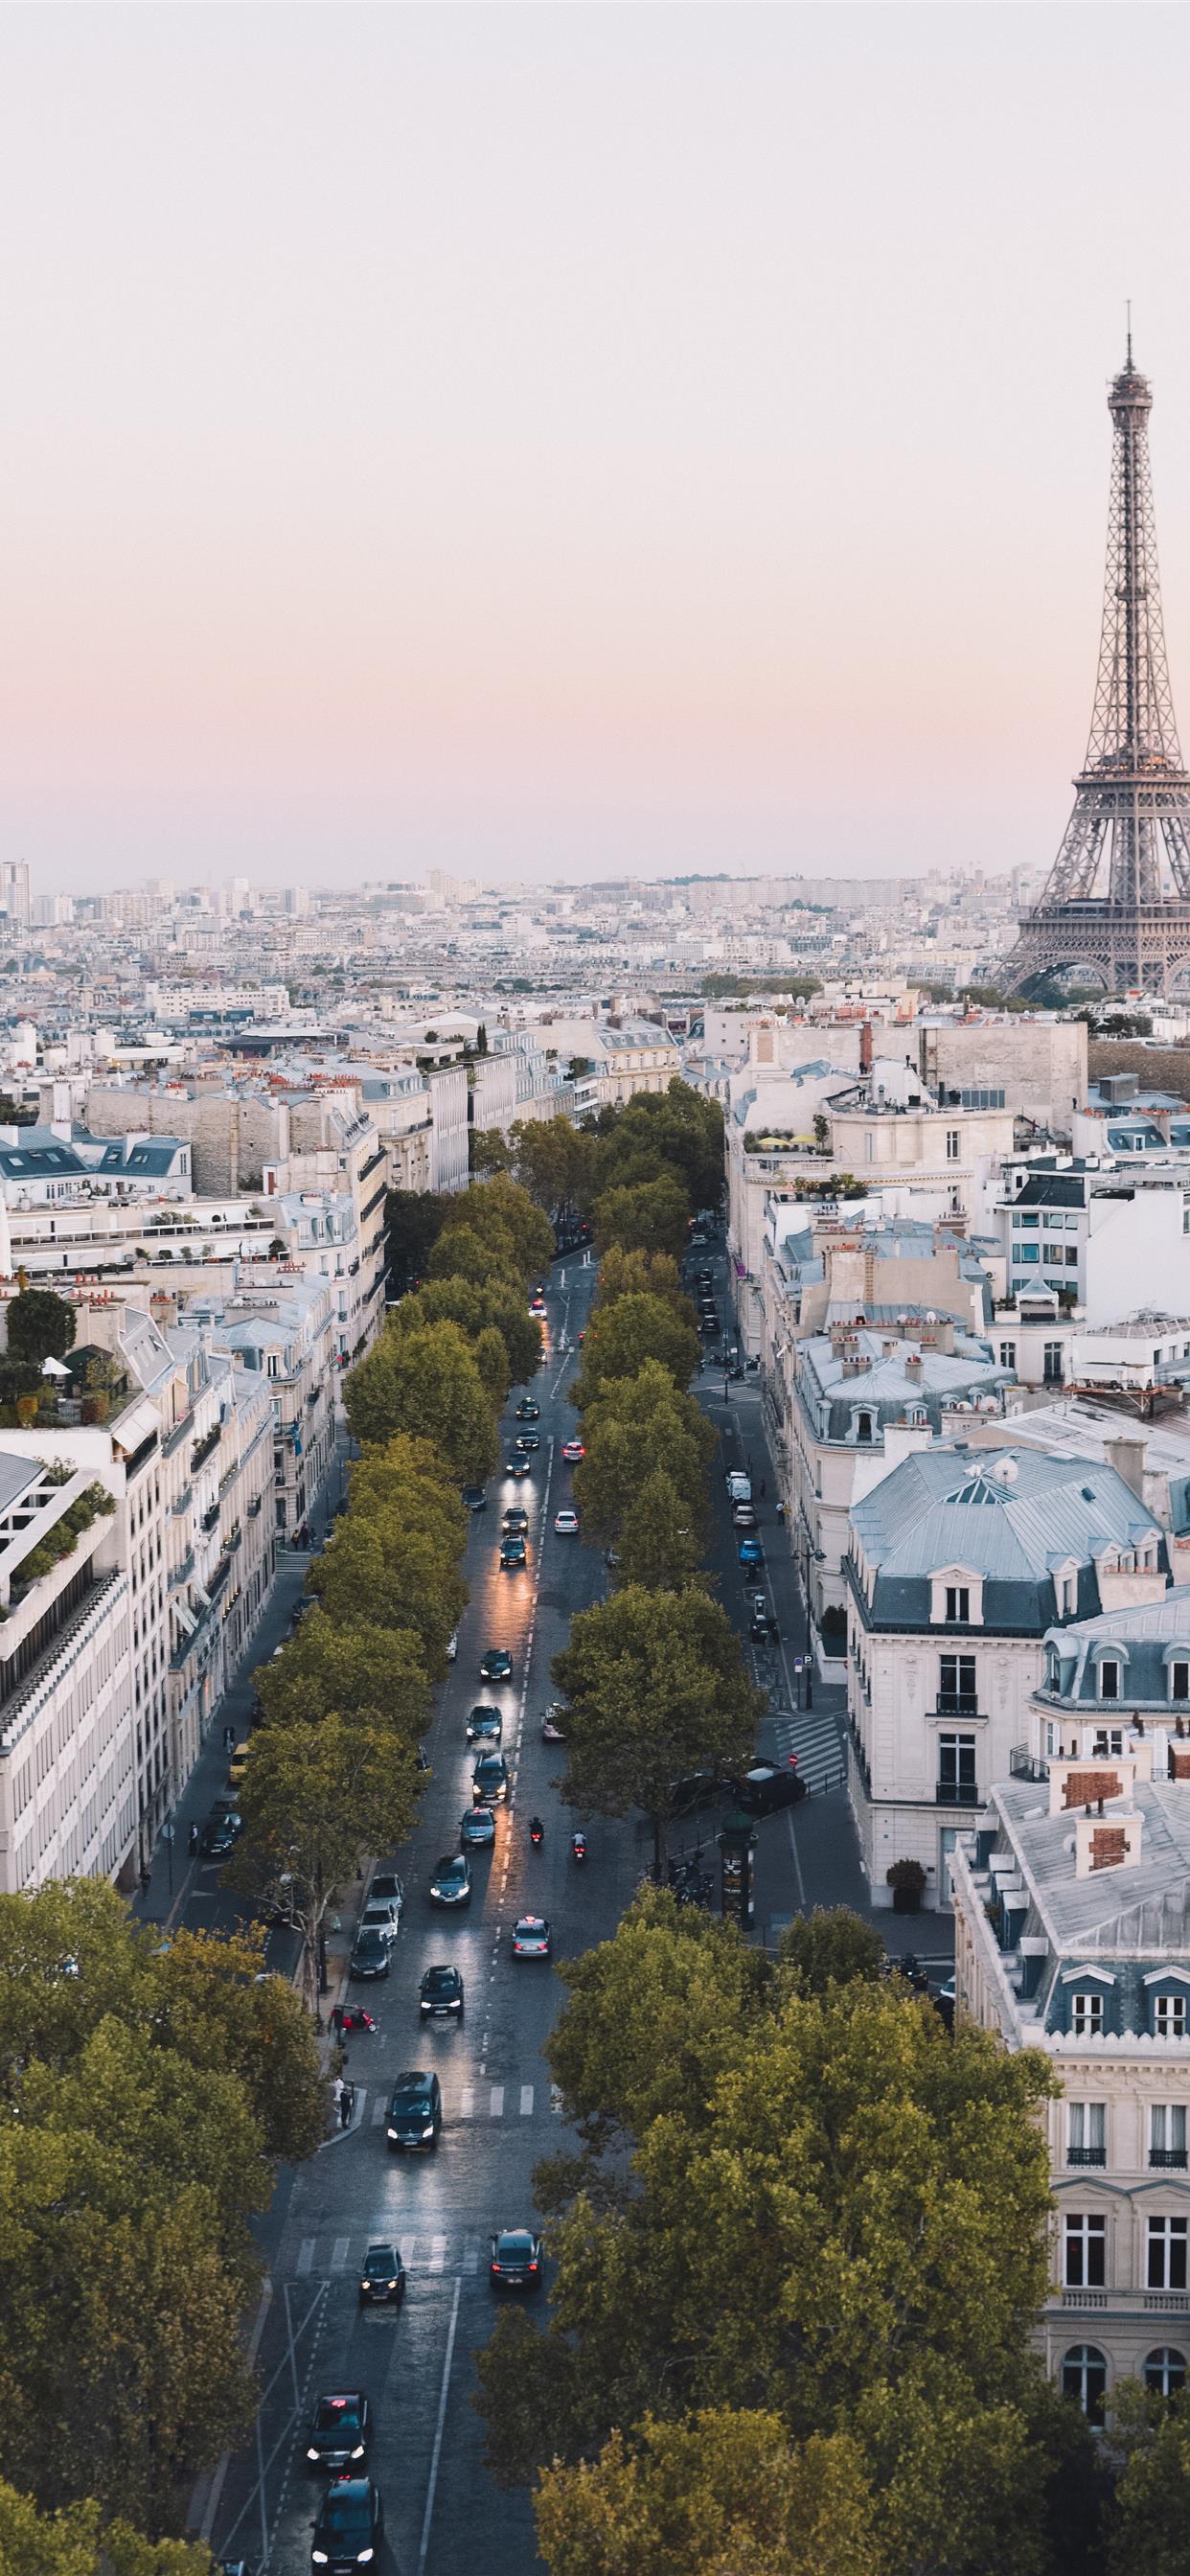 Paris France iPhone X Wallpaper Free Download